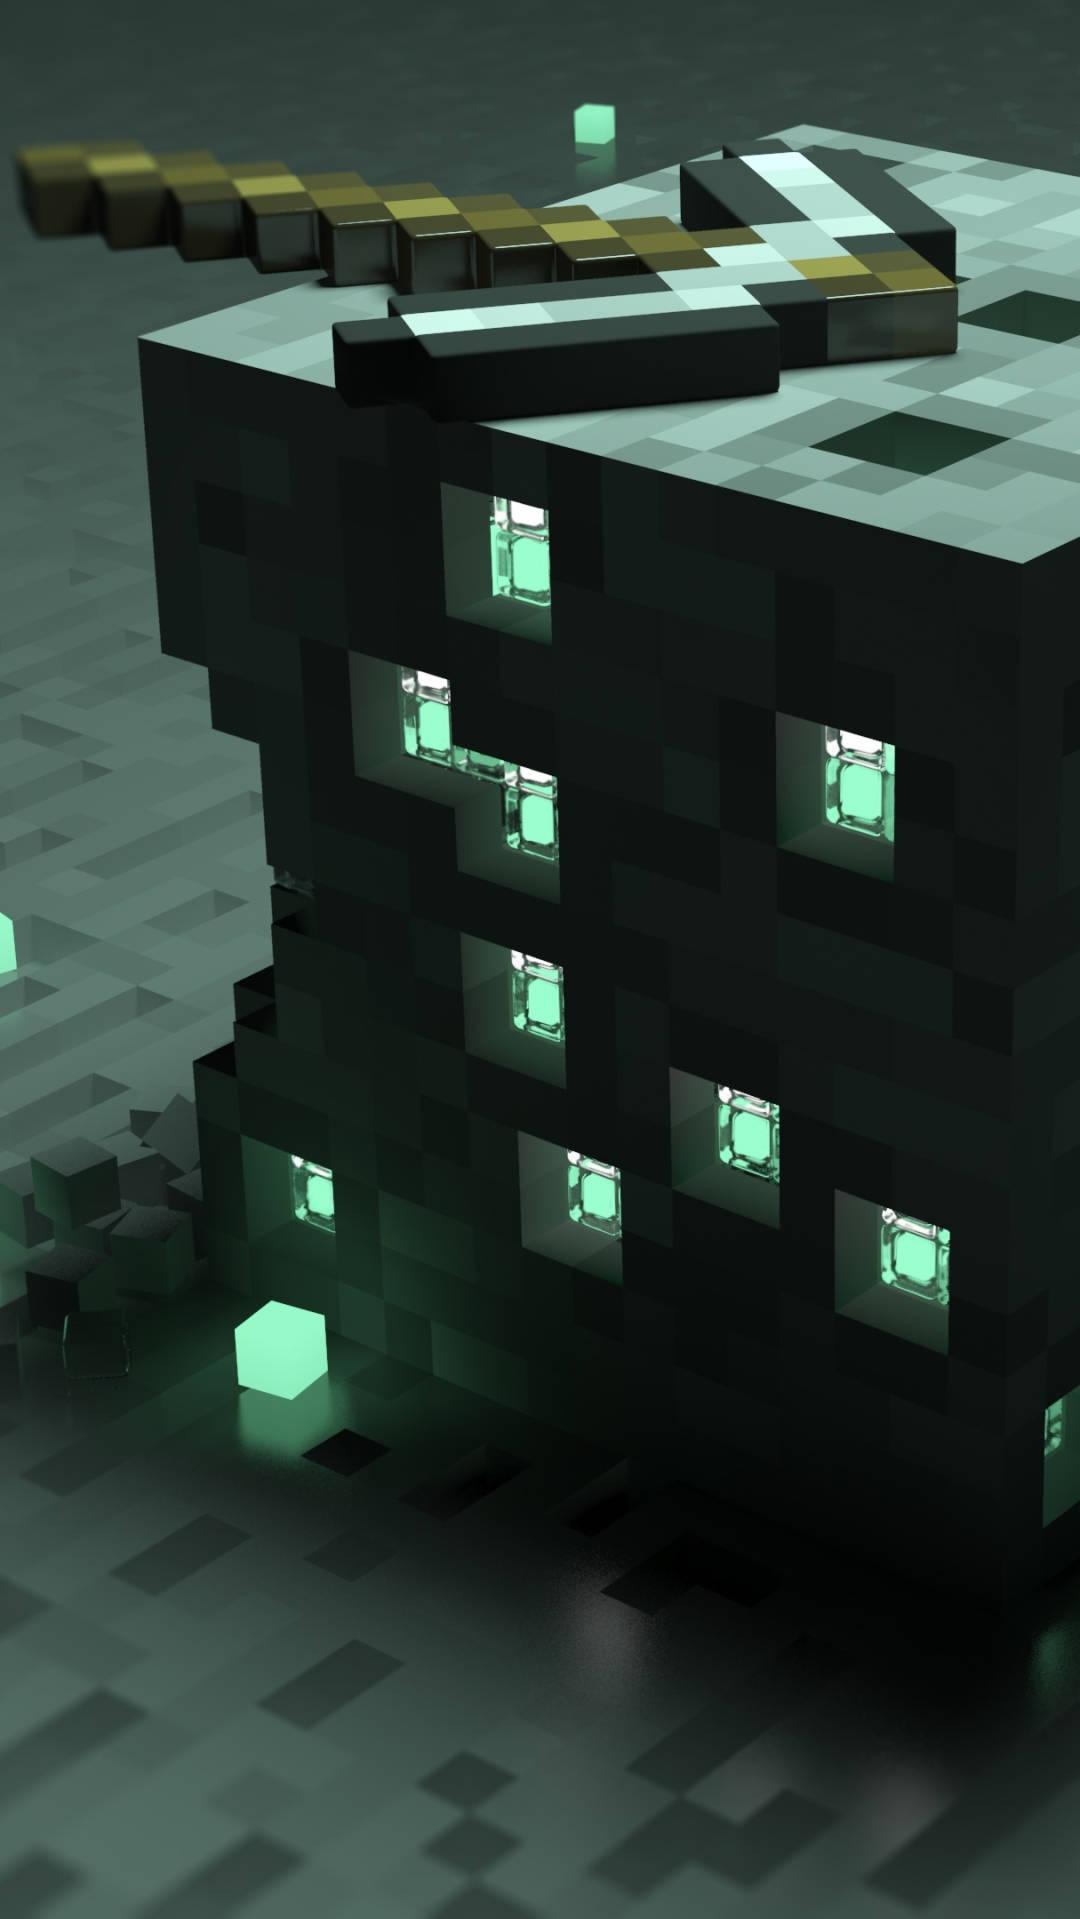 Minecraft Phone Black Building Green Lights Wallpaper